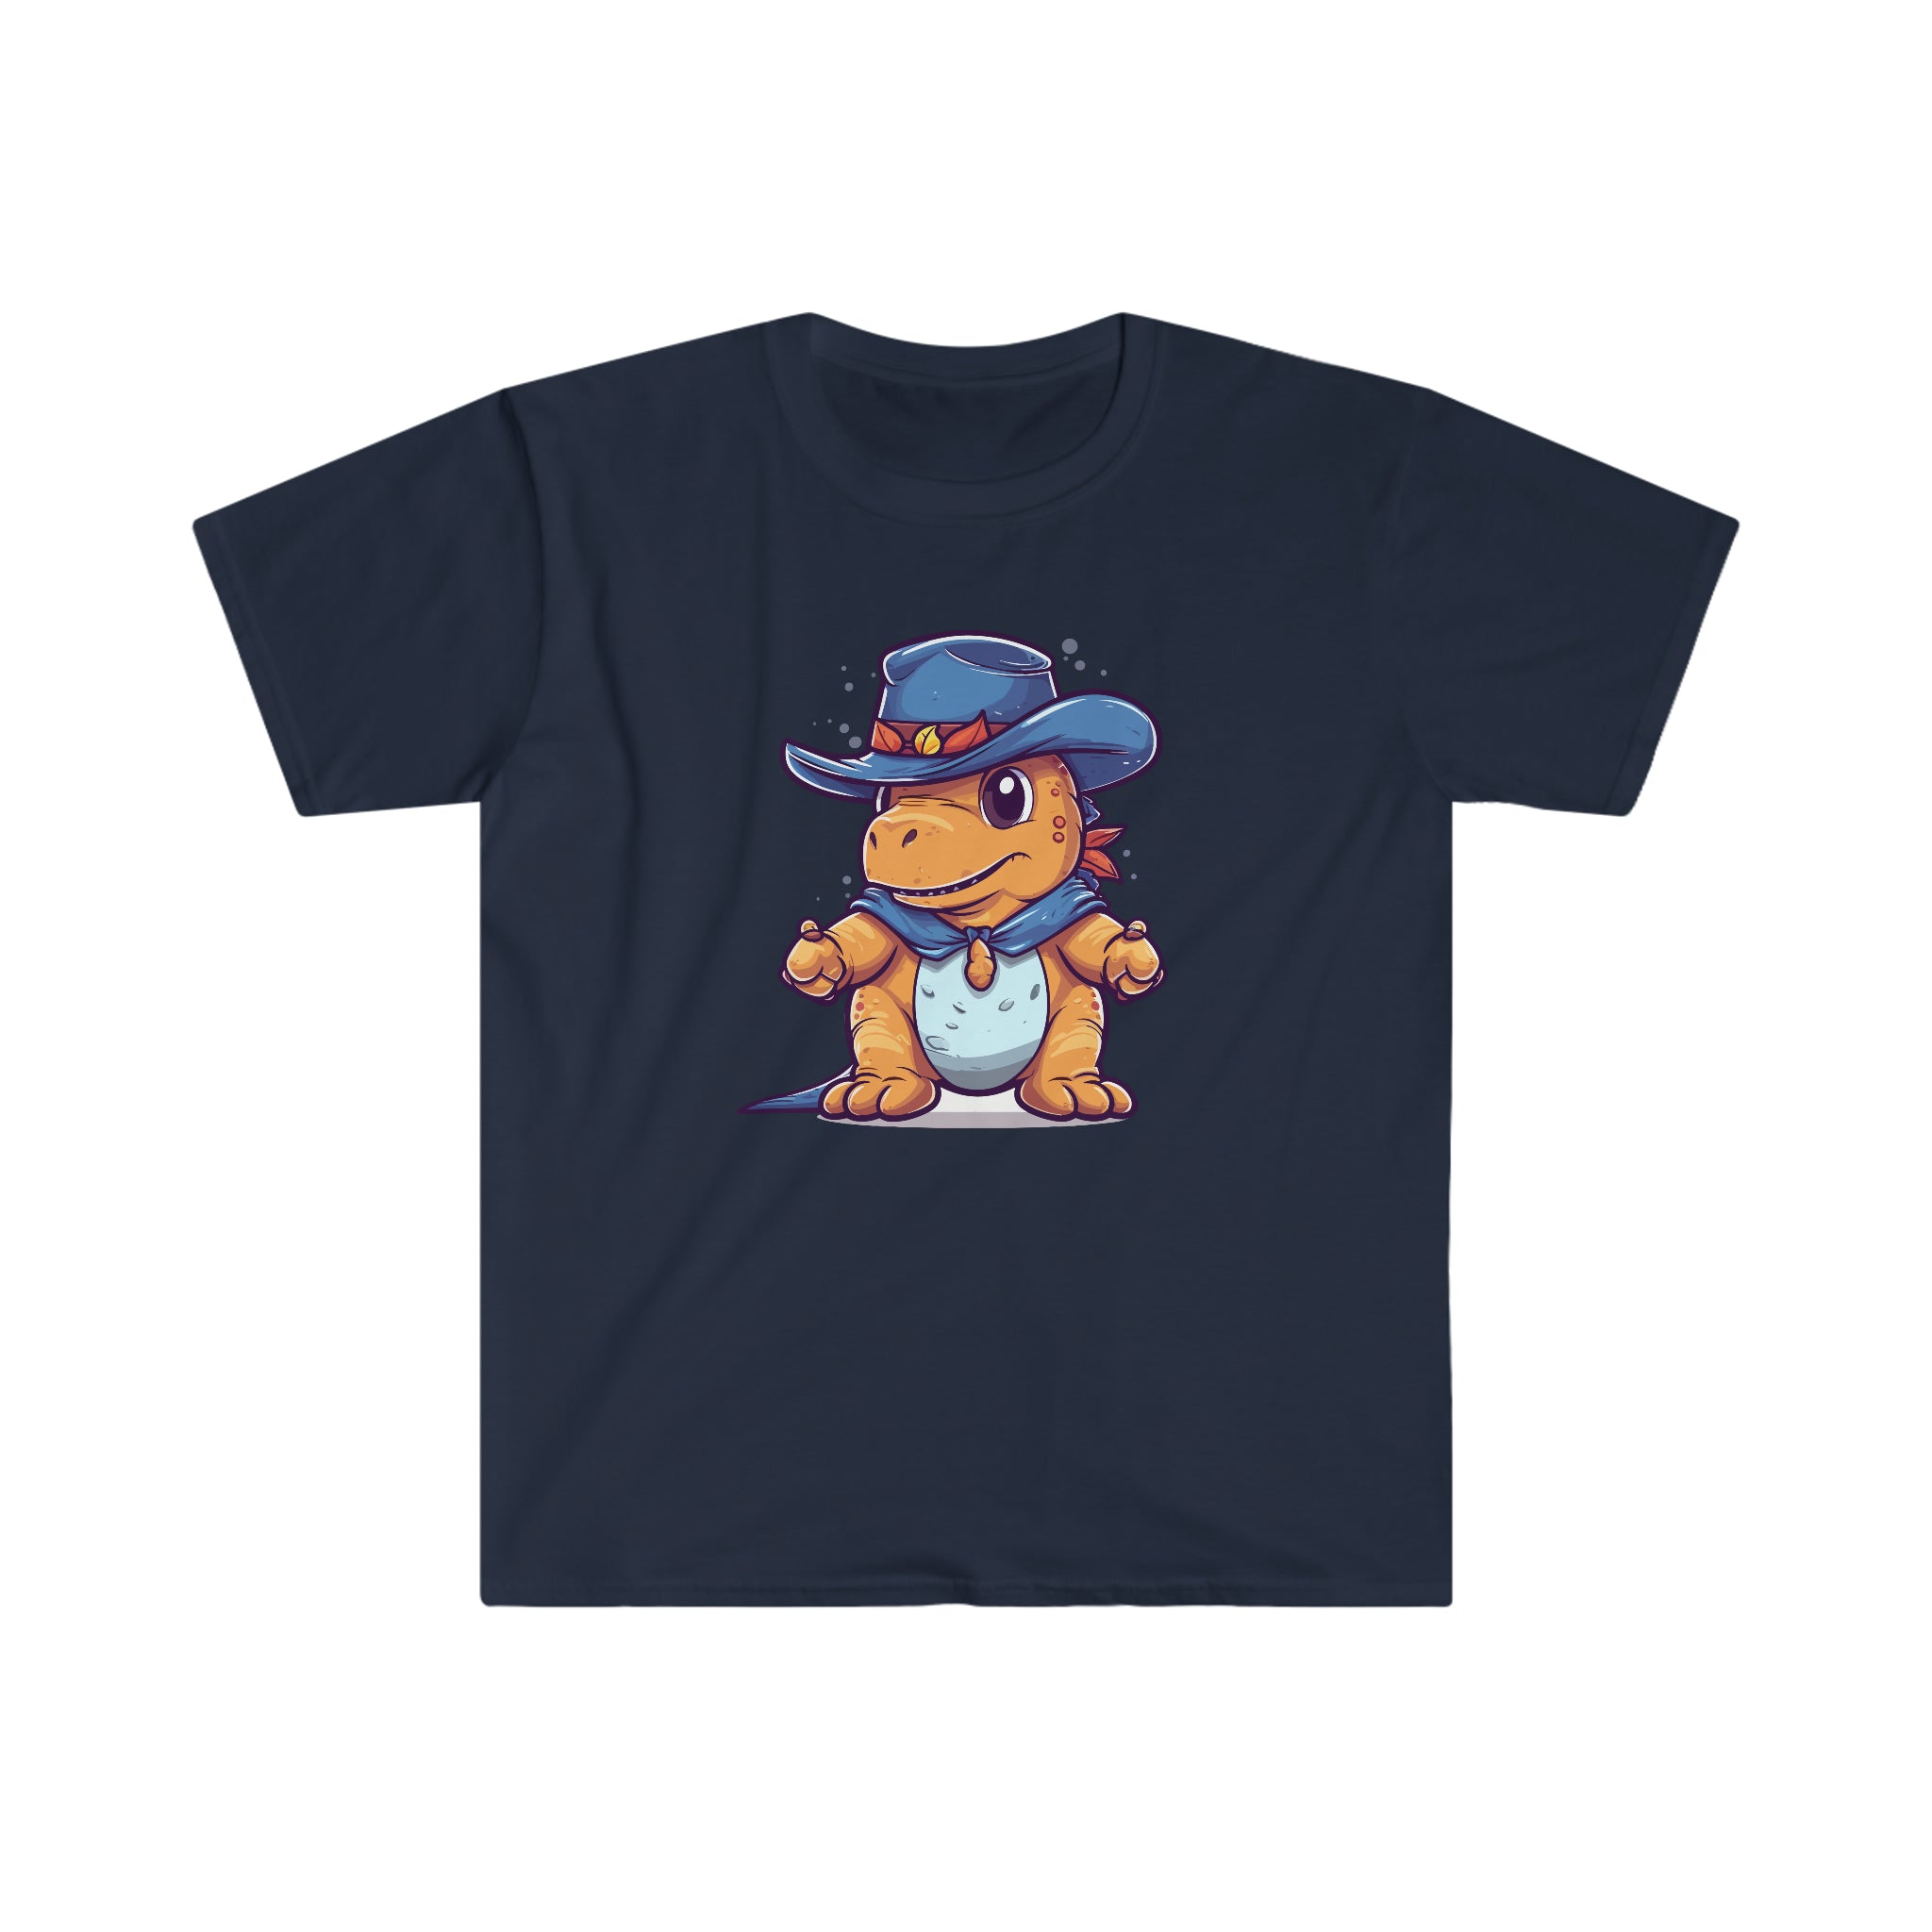 Wild West Whippersnapper: Dinosaur in Cowboy Hat Shirt